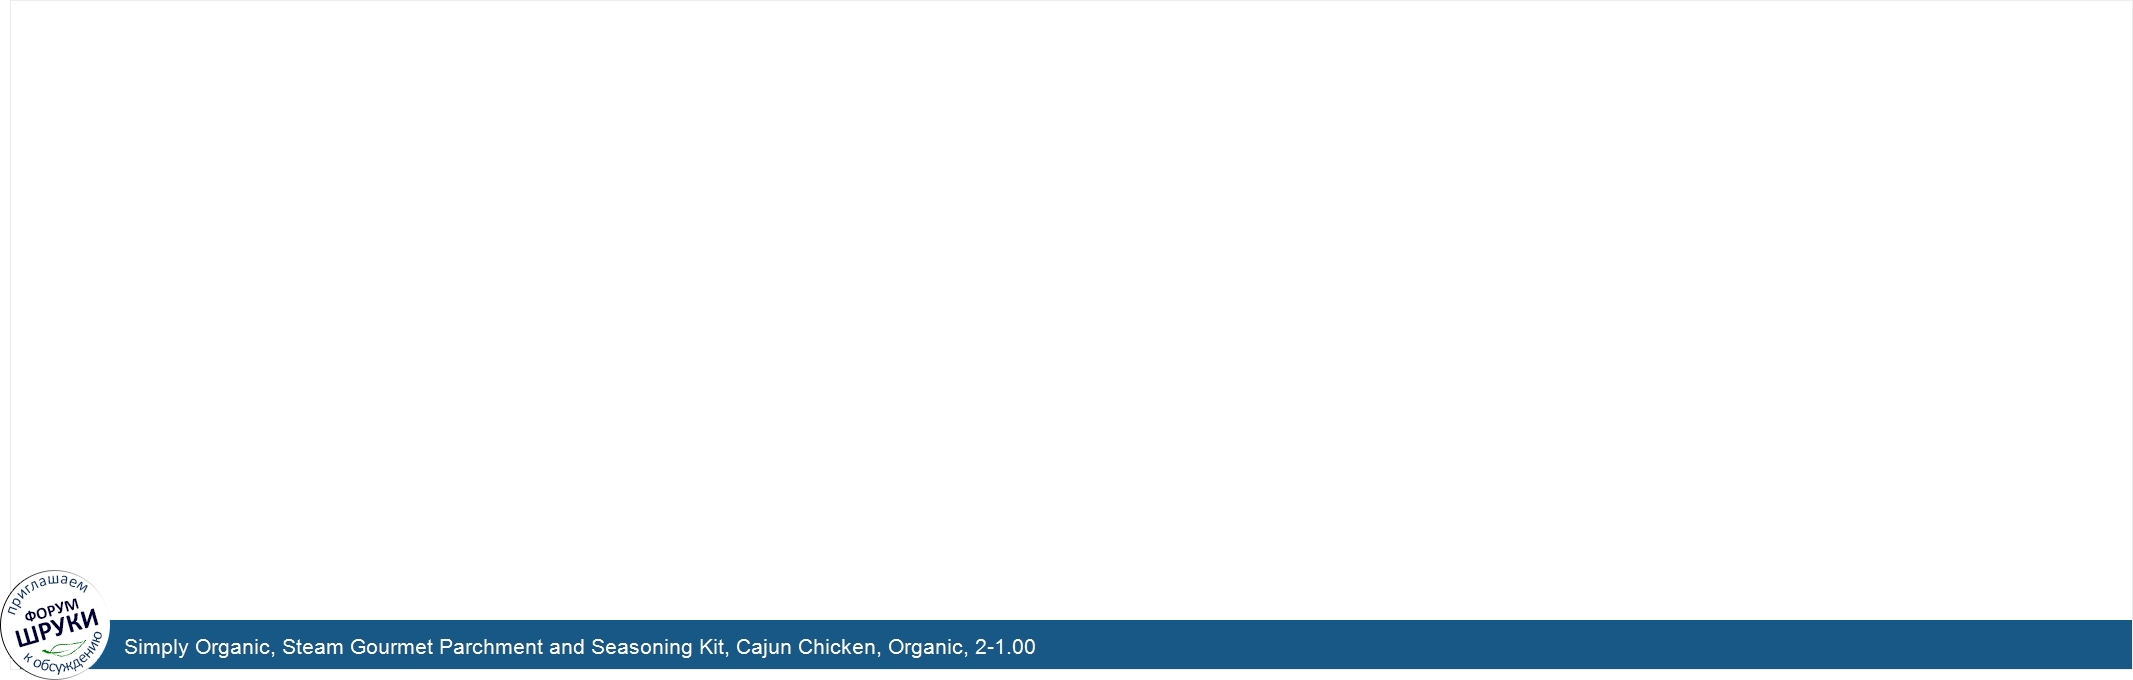 Simply_Organic__Steam_Gourmet_Parchment_and_Seasoning_Kit__Cajun_Chicken__Organic__2_1.00_oz__...jpg